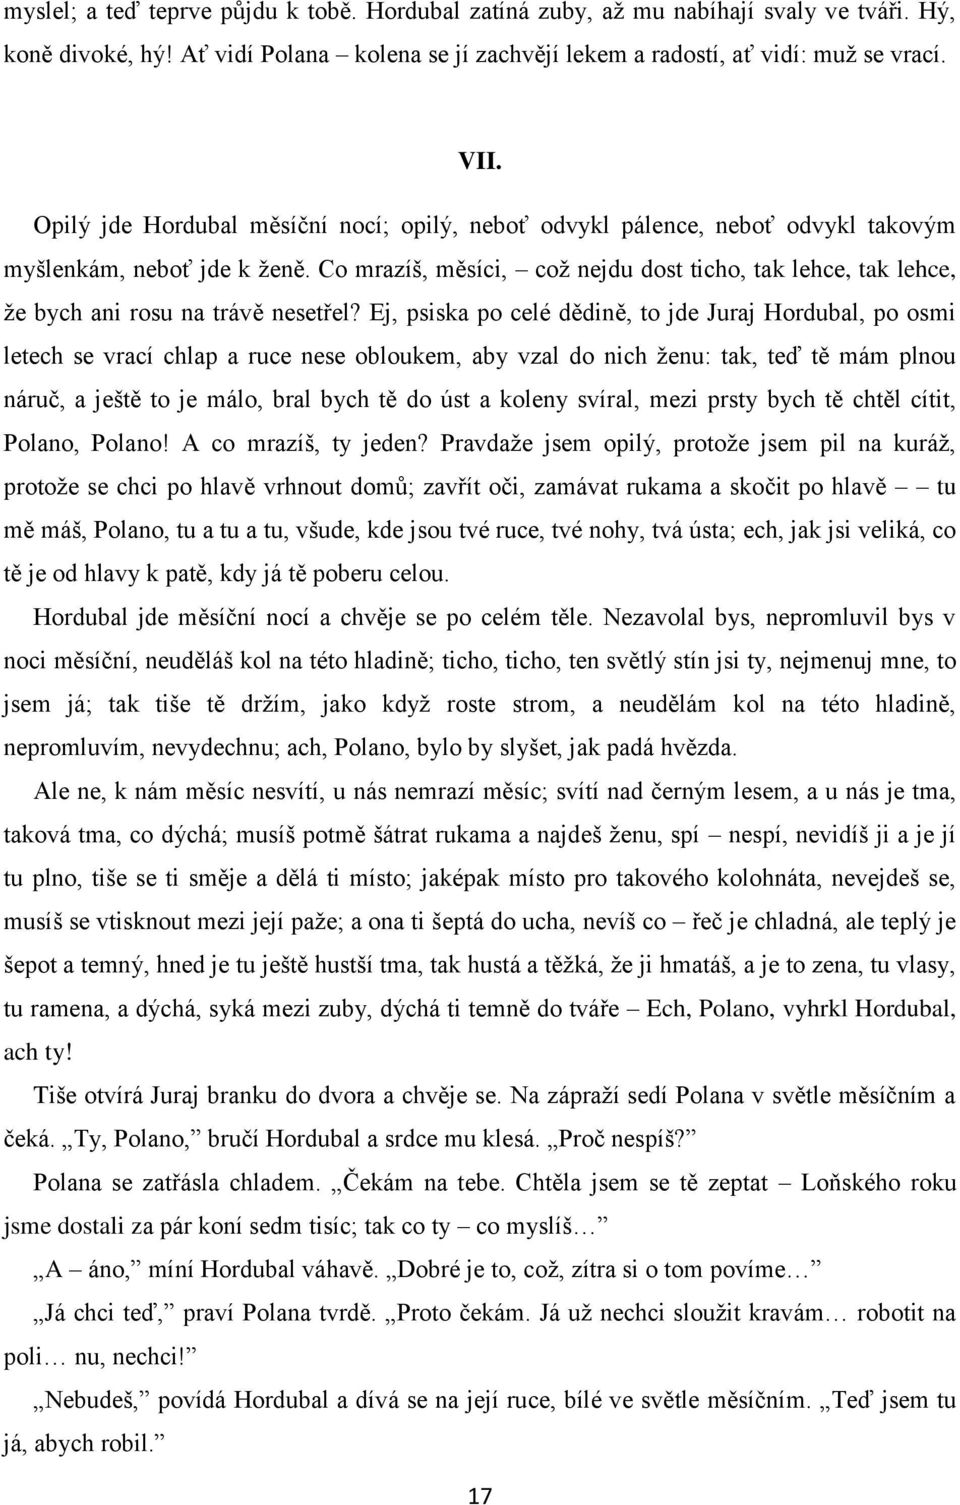 KAREL ČAPEK HORDUBAL 1 - PDF Stažení zdarma